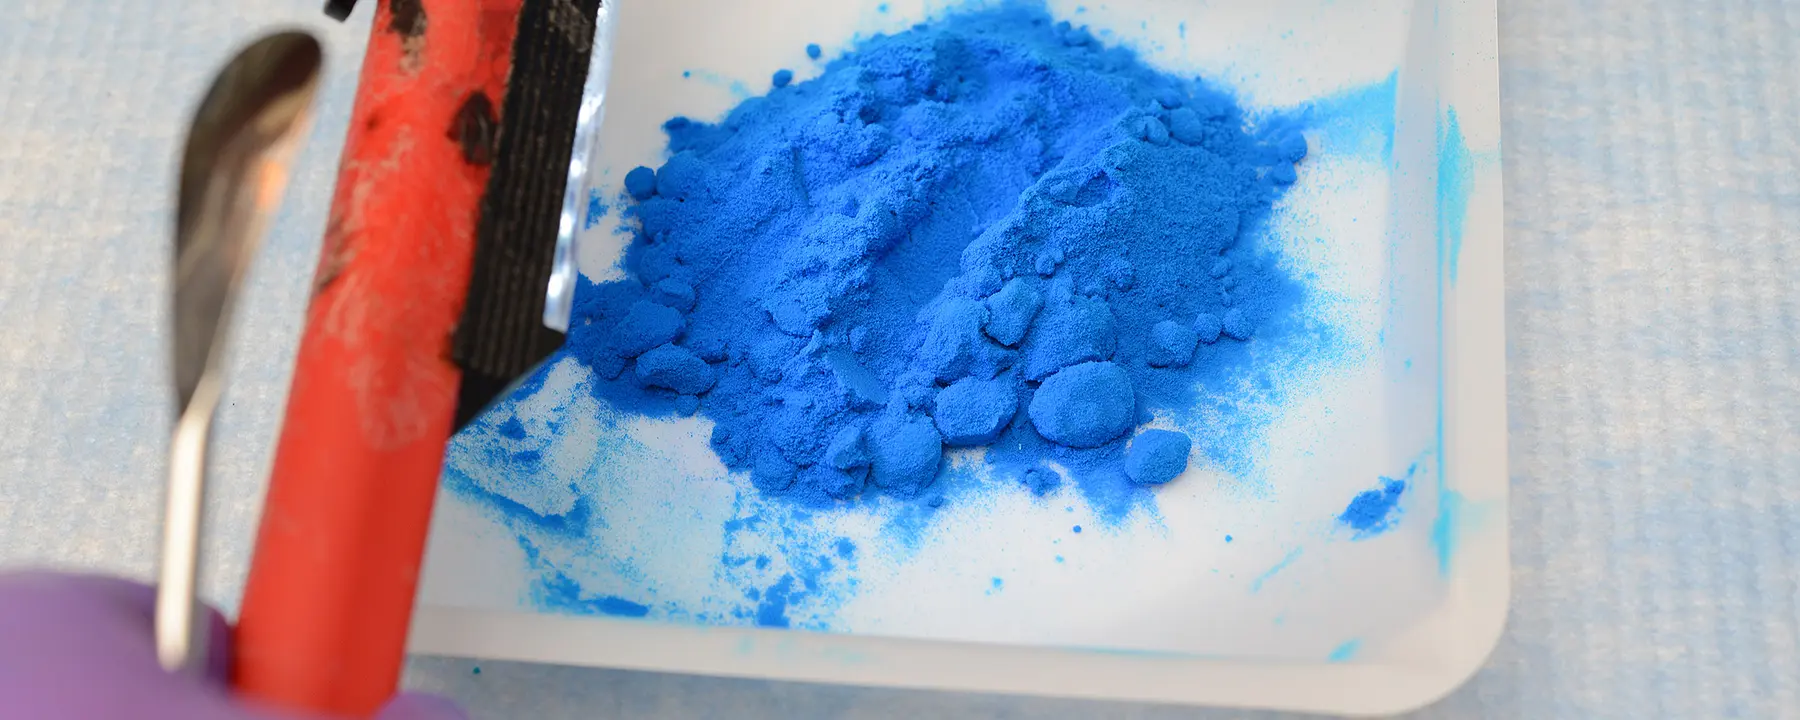 Blue powder on plate